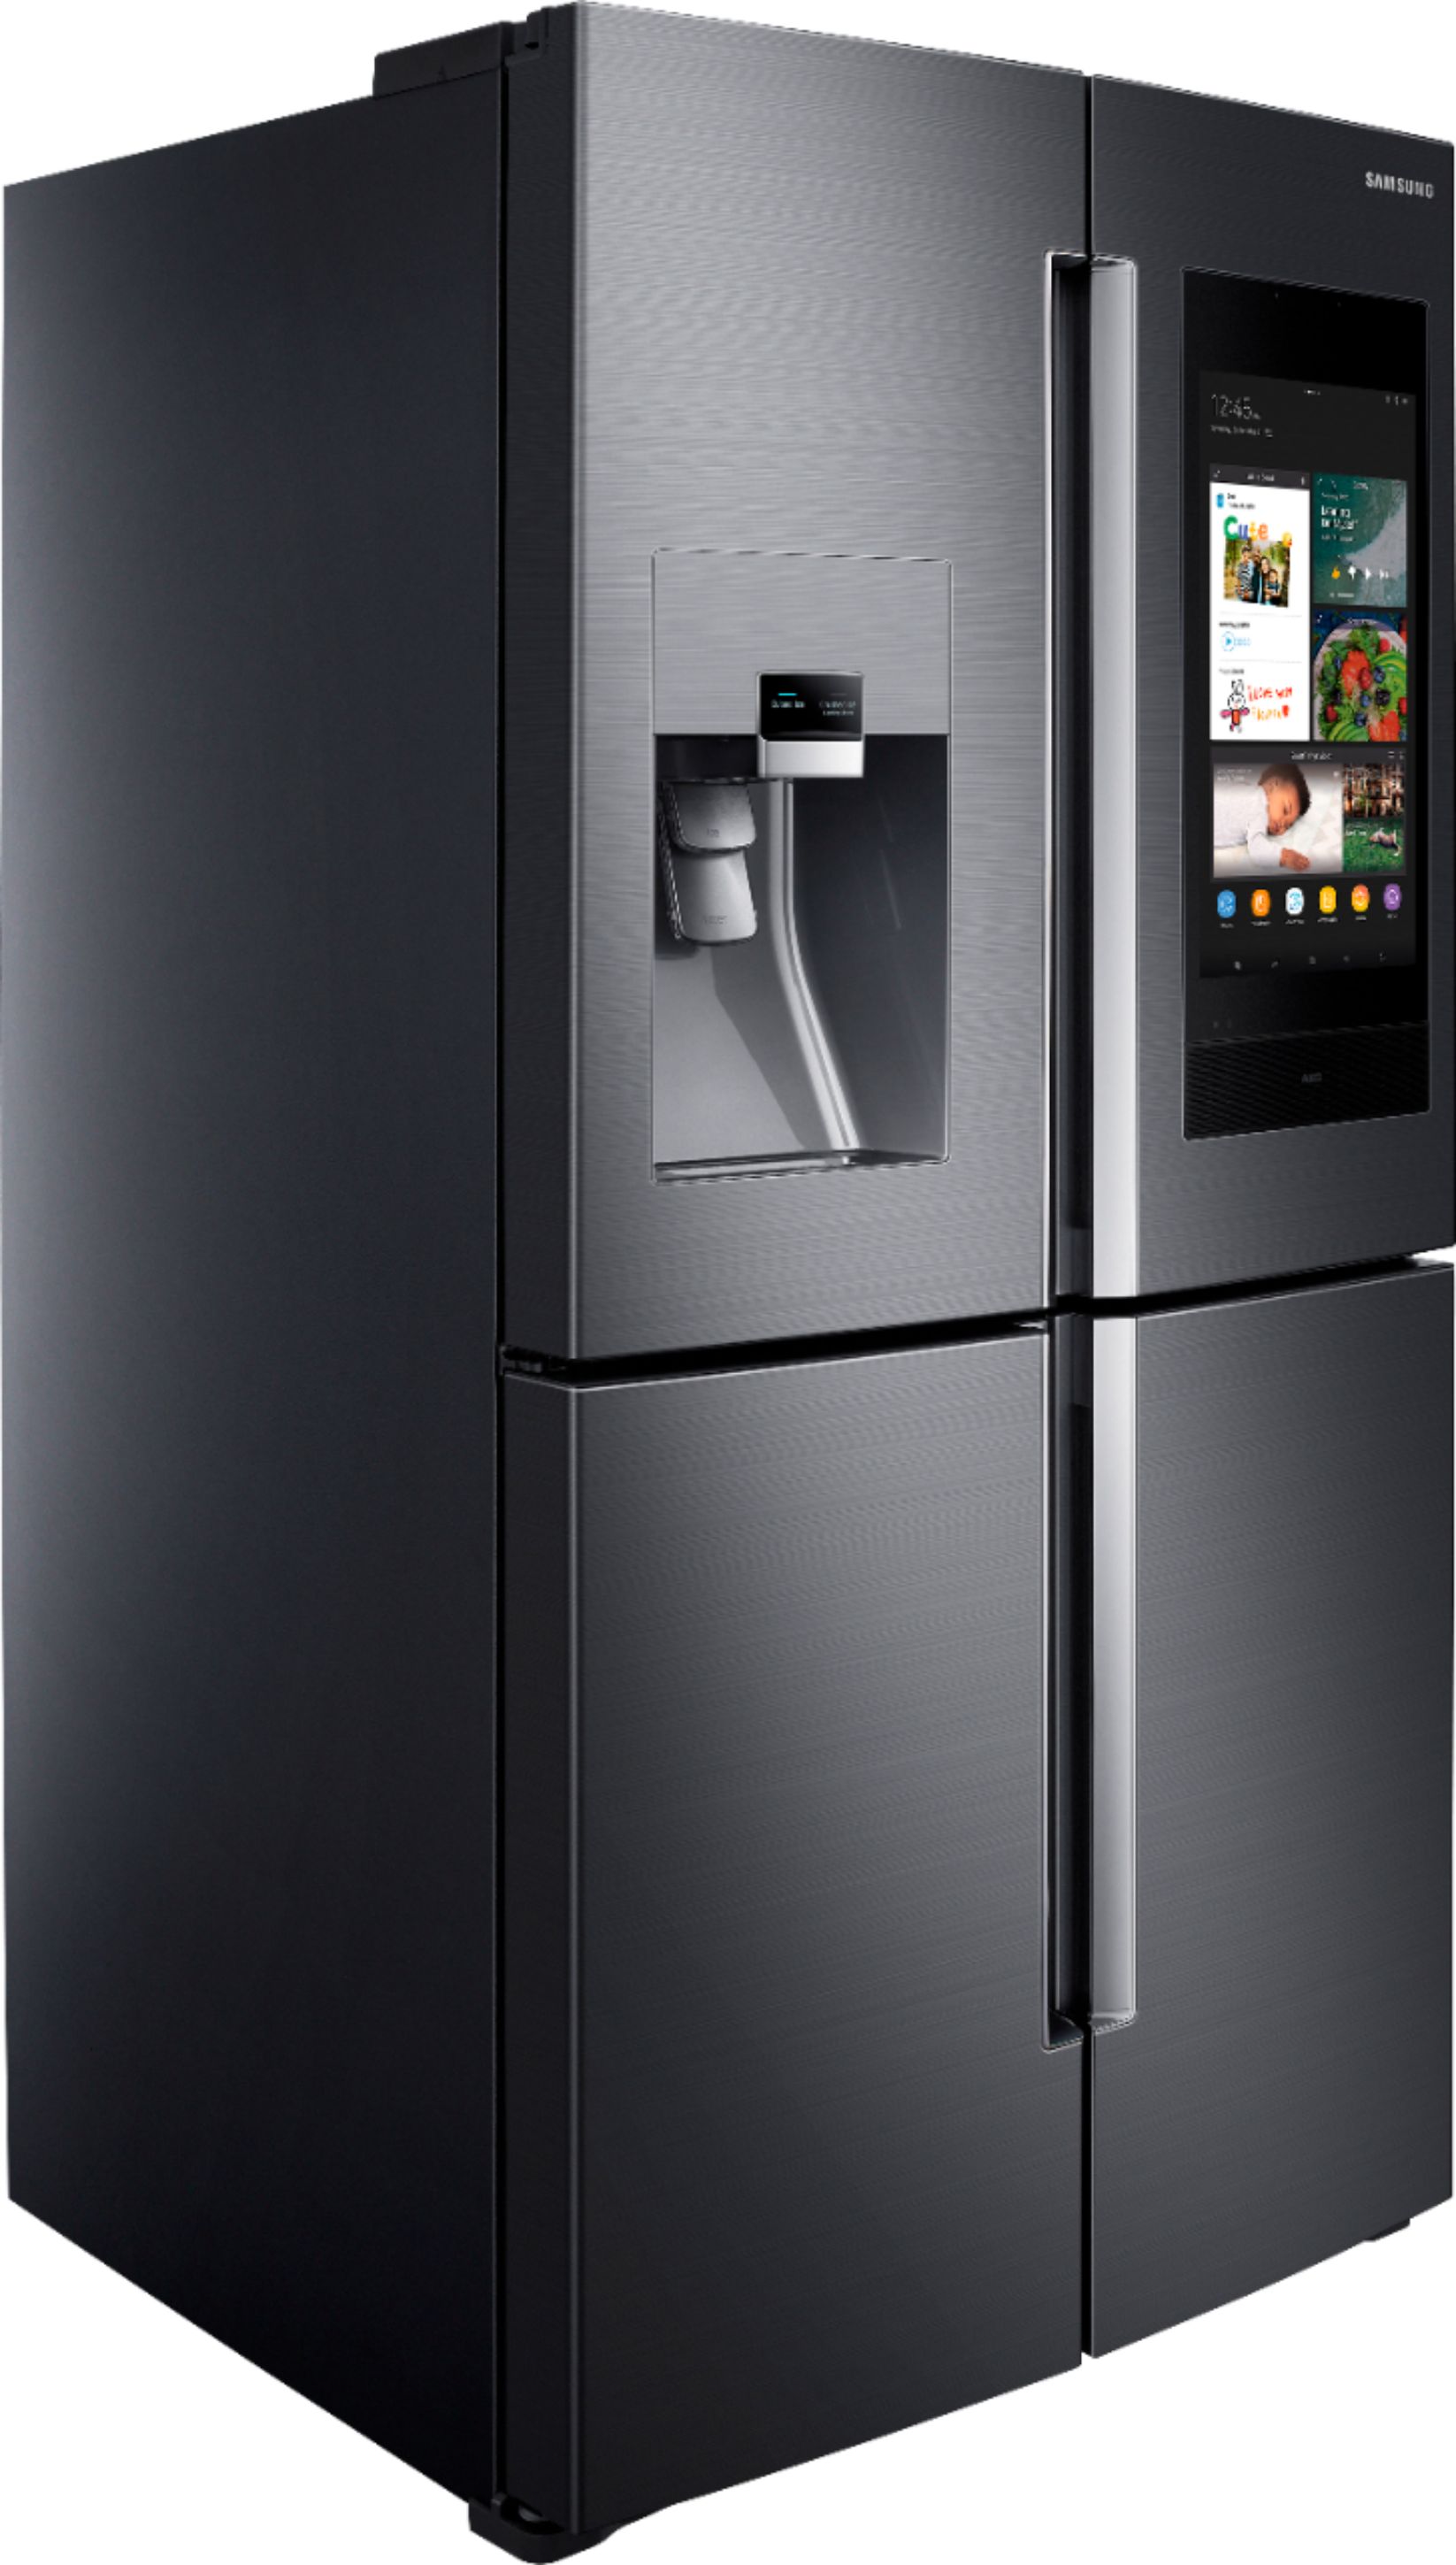 Angle View: Samsung - Family Hub 28 Cu. Ft. 4-Door Flex French Door  Fingerprint Resistant Refrigerator - Black stainless steel